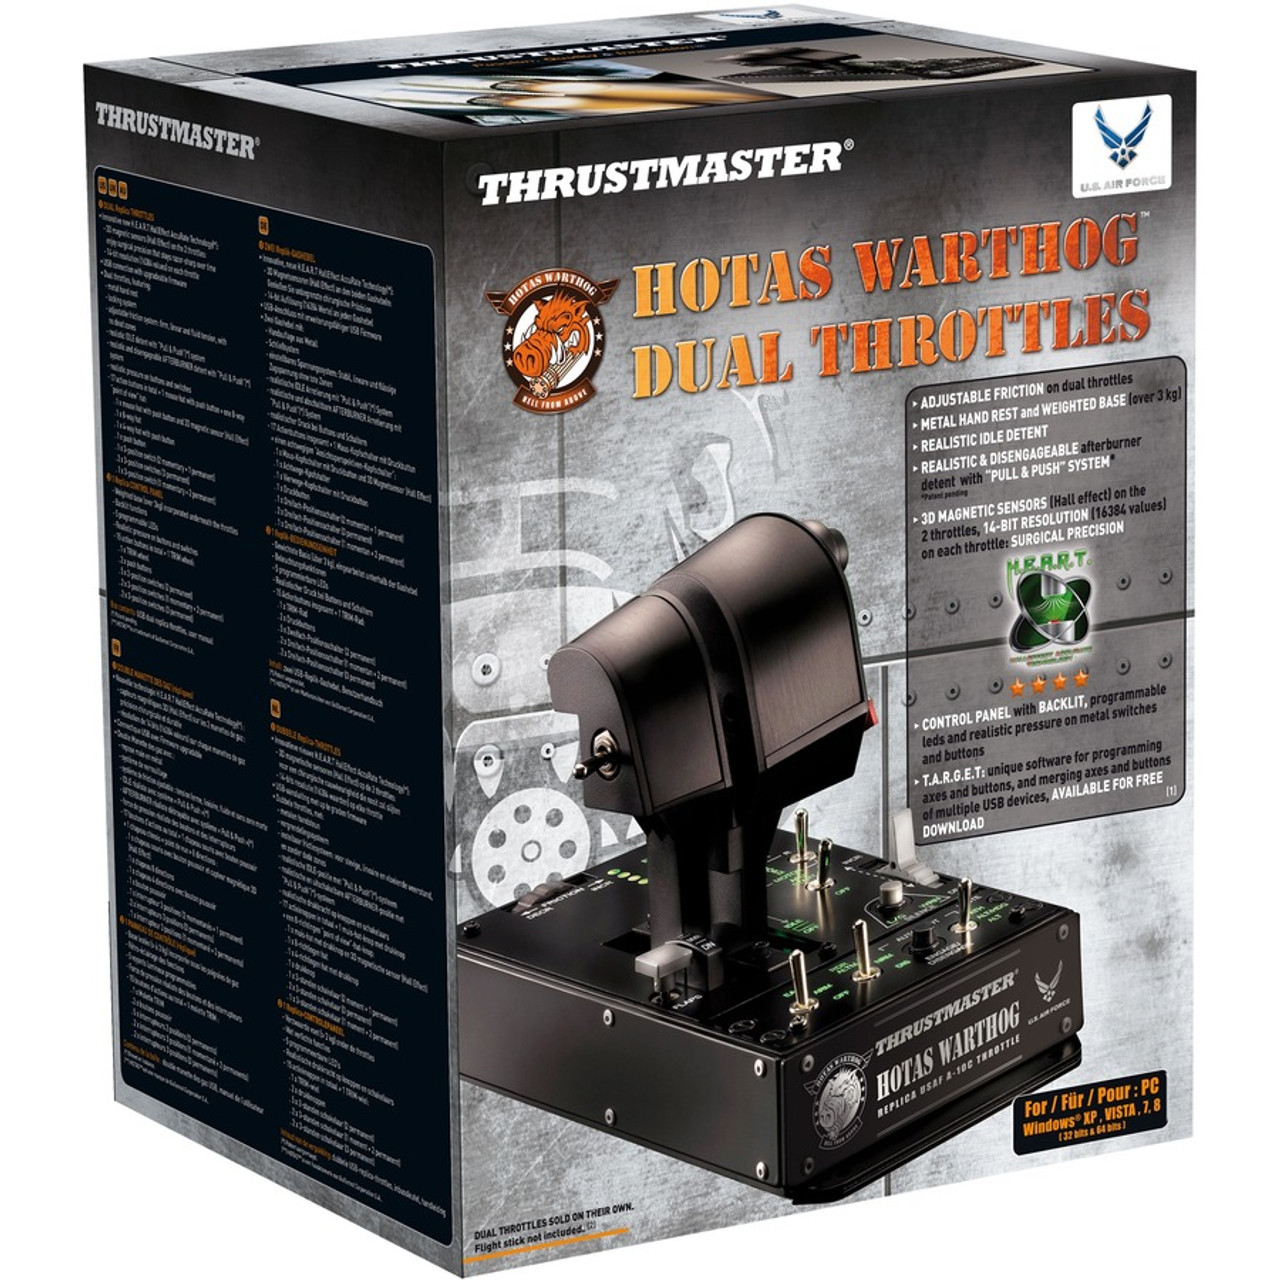 Thrustmaster HOTAS Warthog Flight Stick, Throttle and Control